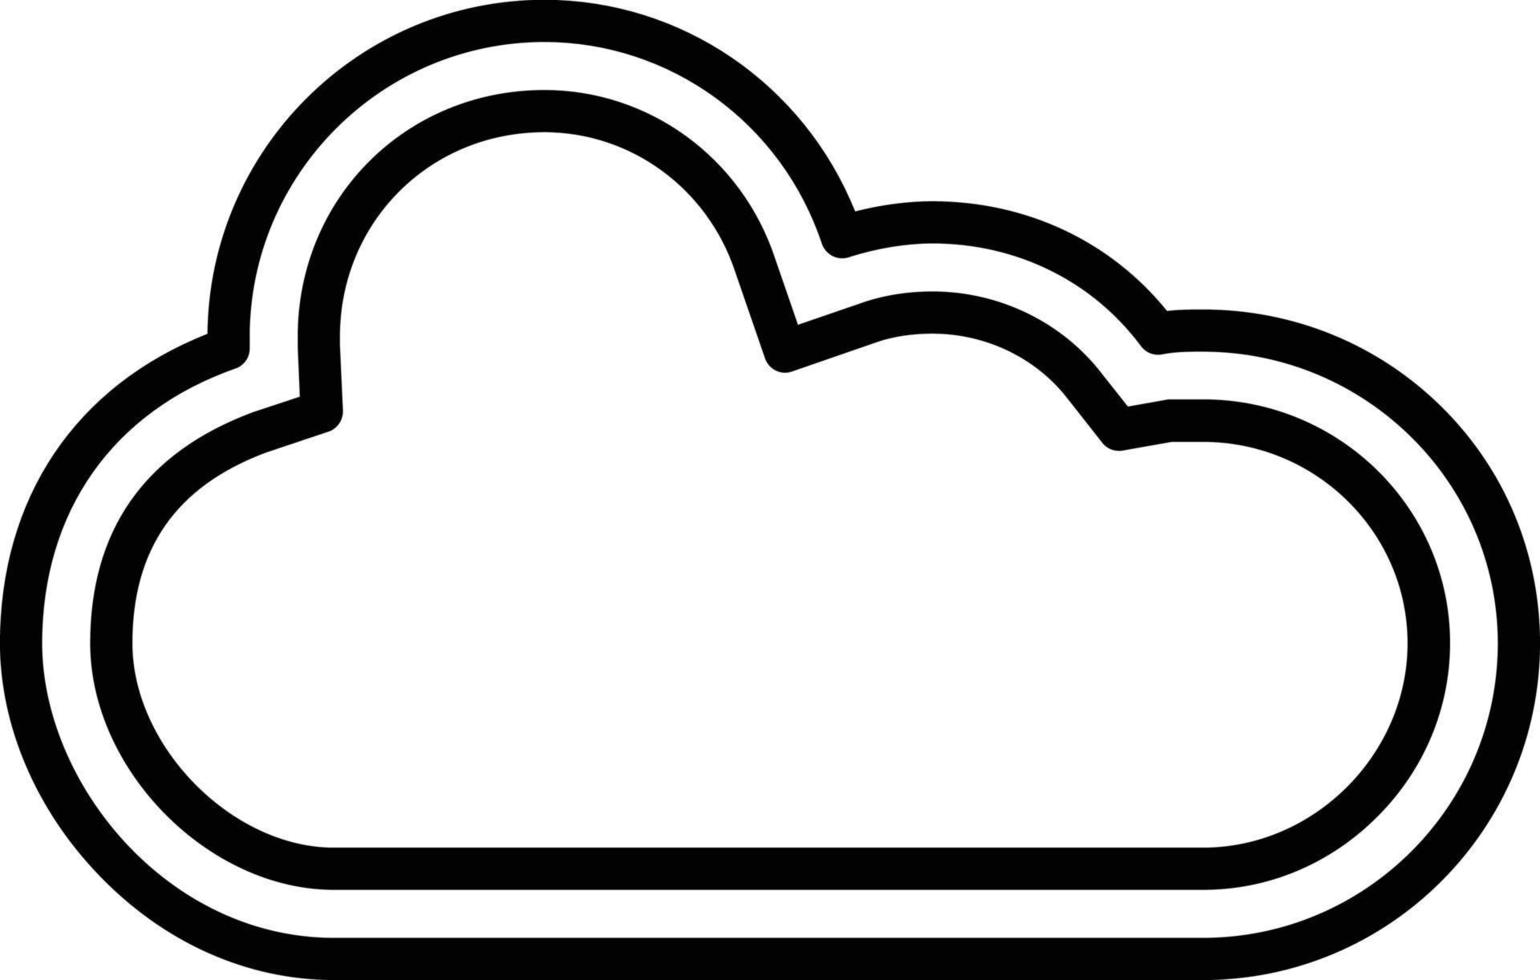 Cloud-Liniensymbol vektor